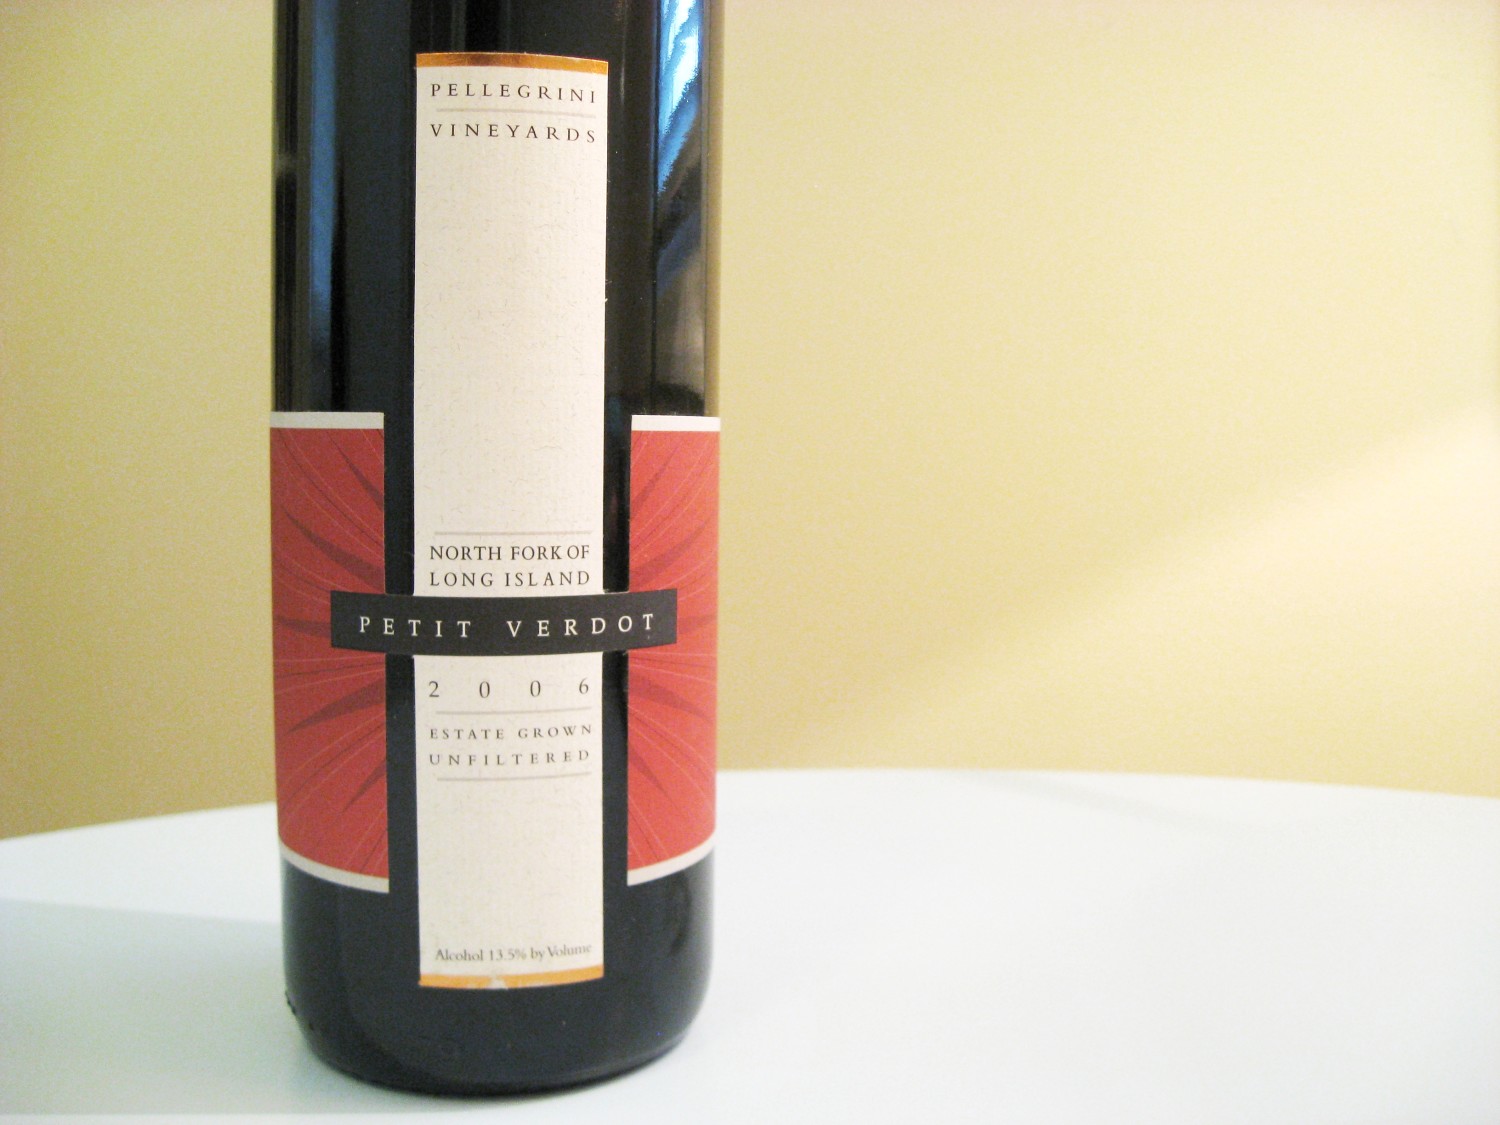 Pellegrini Vineyards, Petit Verdot 2006, North Fork of Long Island, New York, Wine Casual